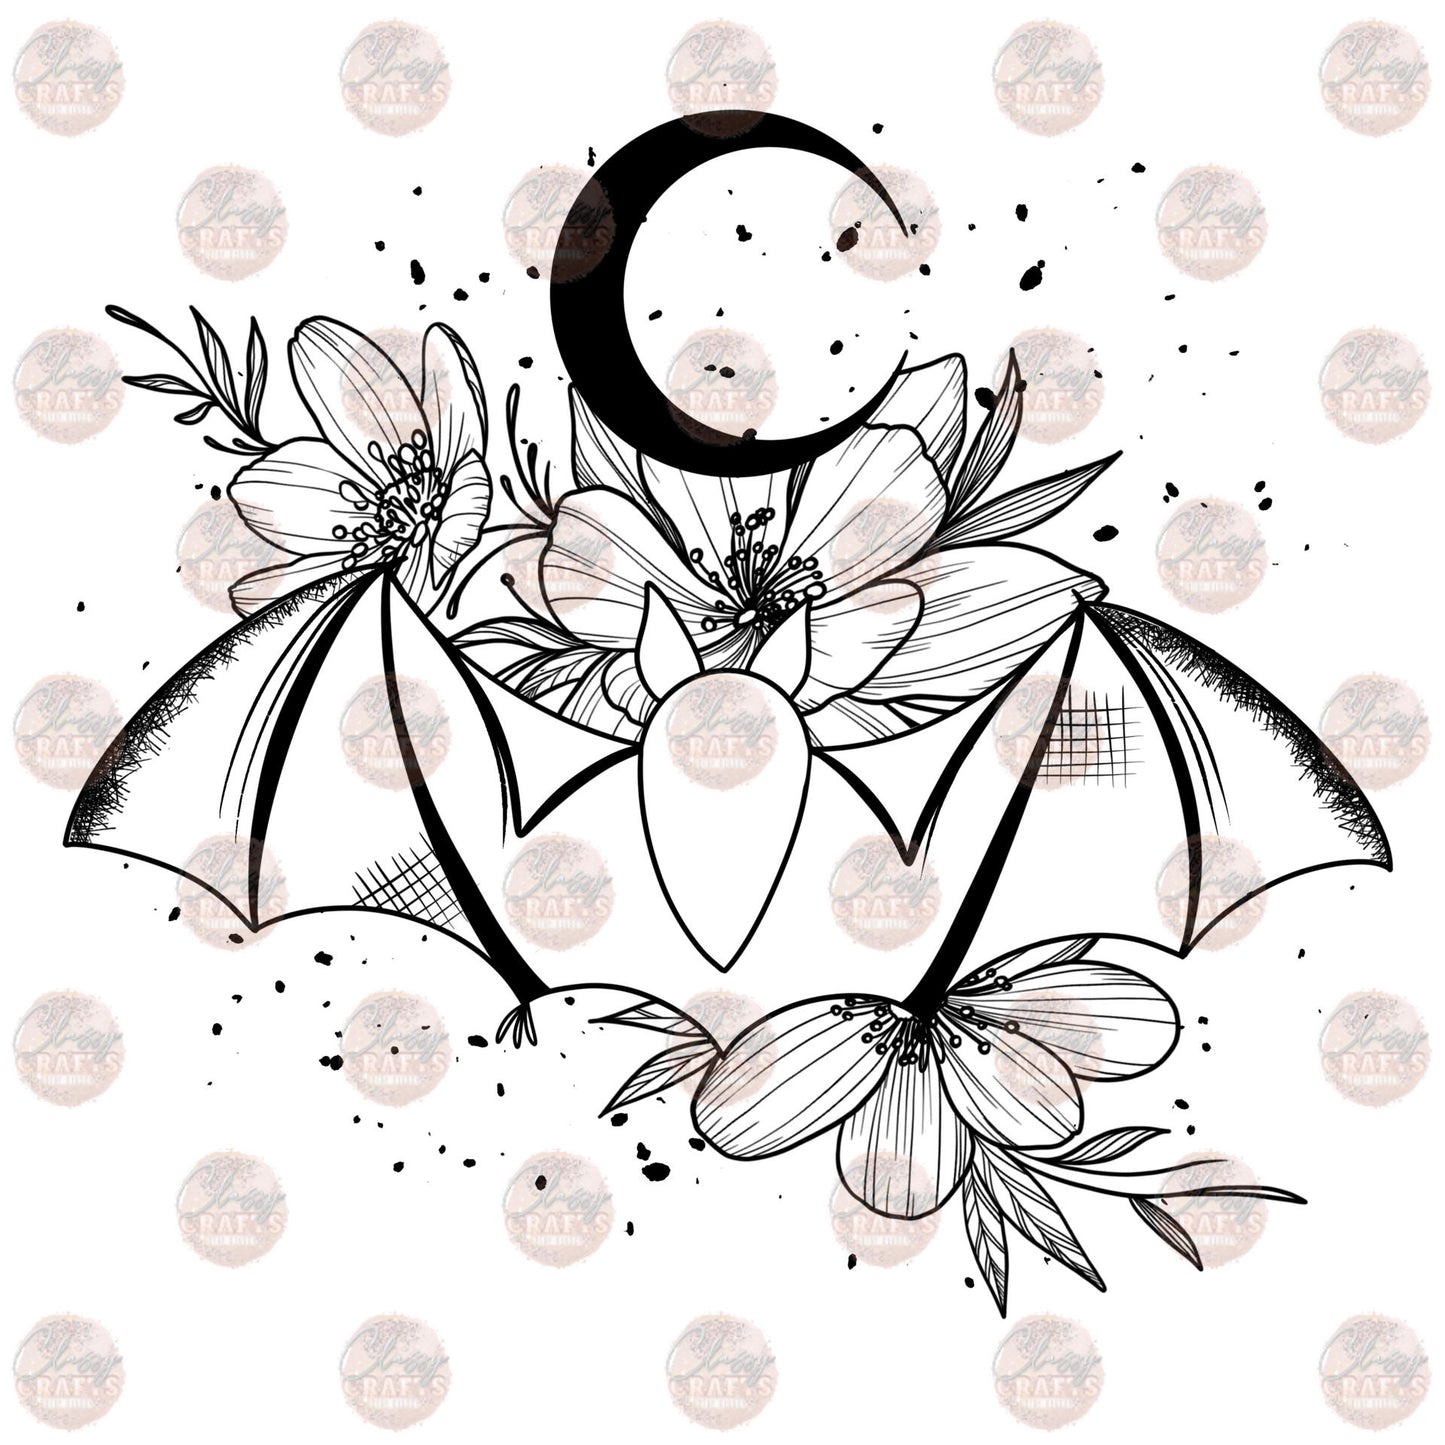 Bat Floral B&W - Sublimation Transfer